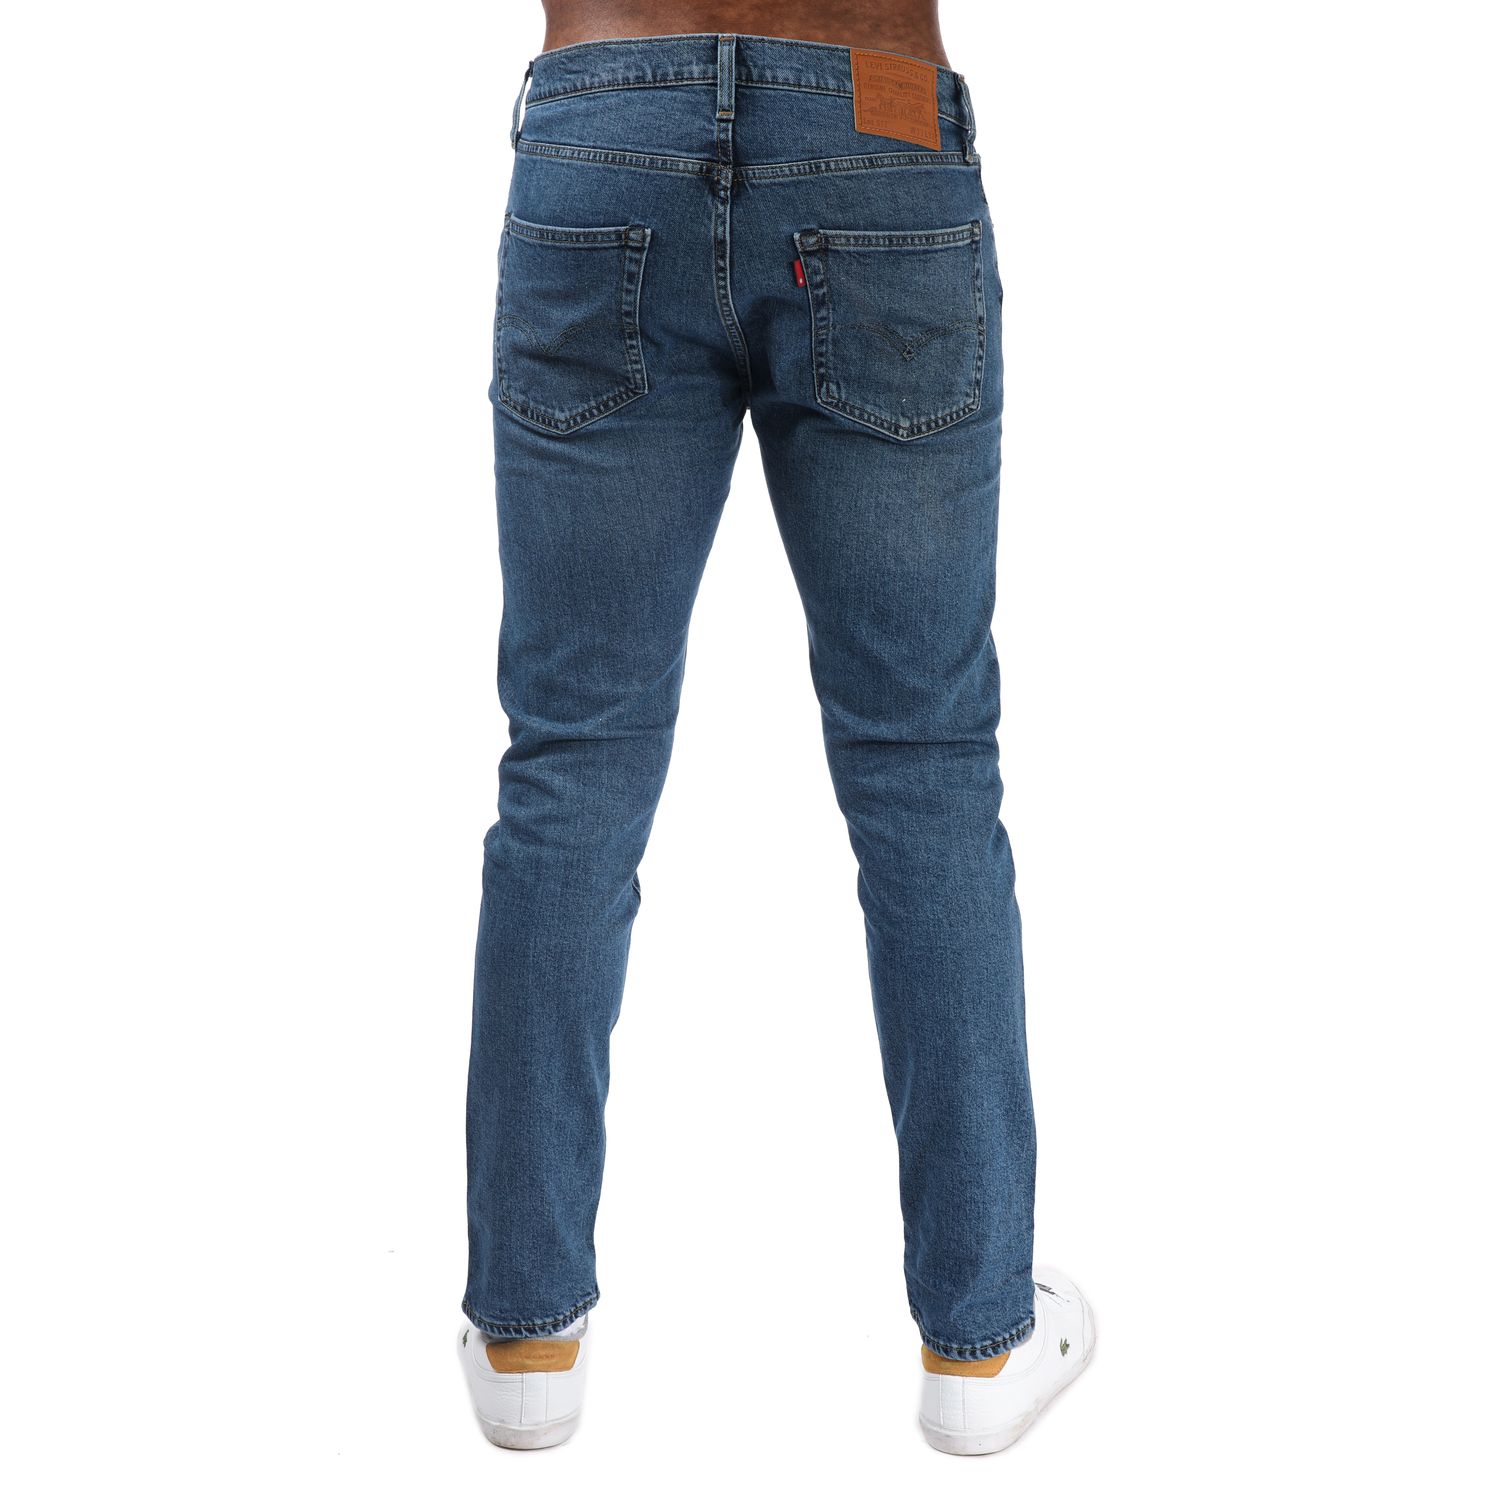 Denim Levis Mens 501 Original Fit Selvedge Jeans - Get The Label